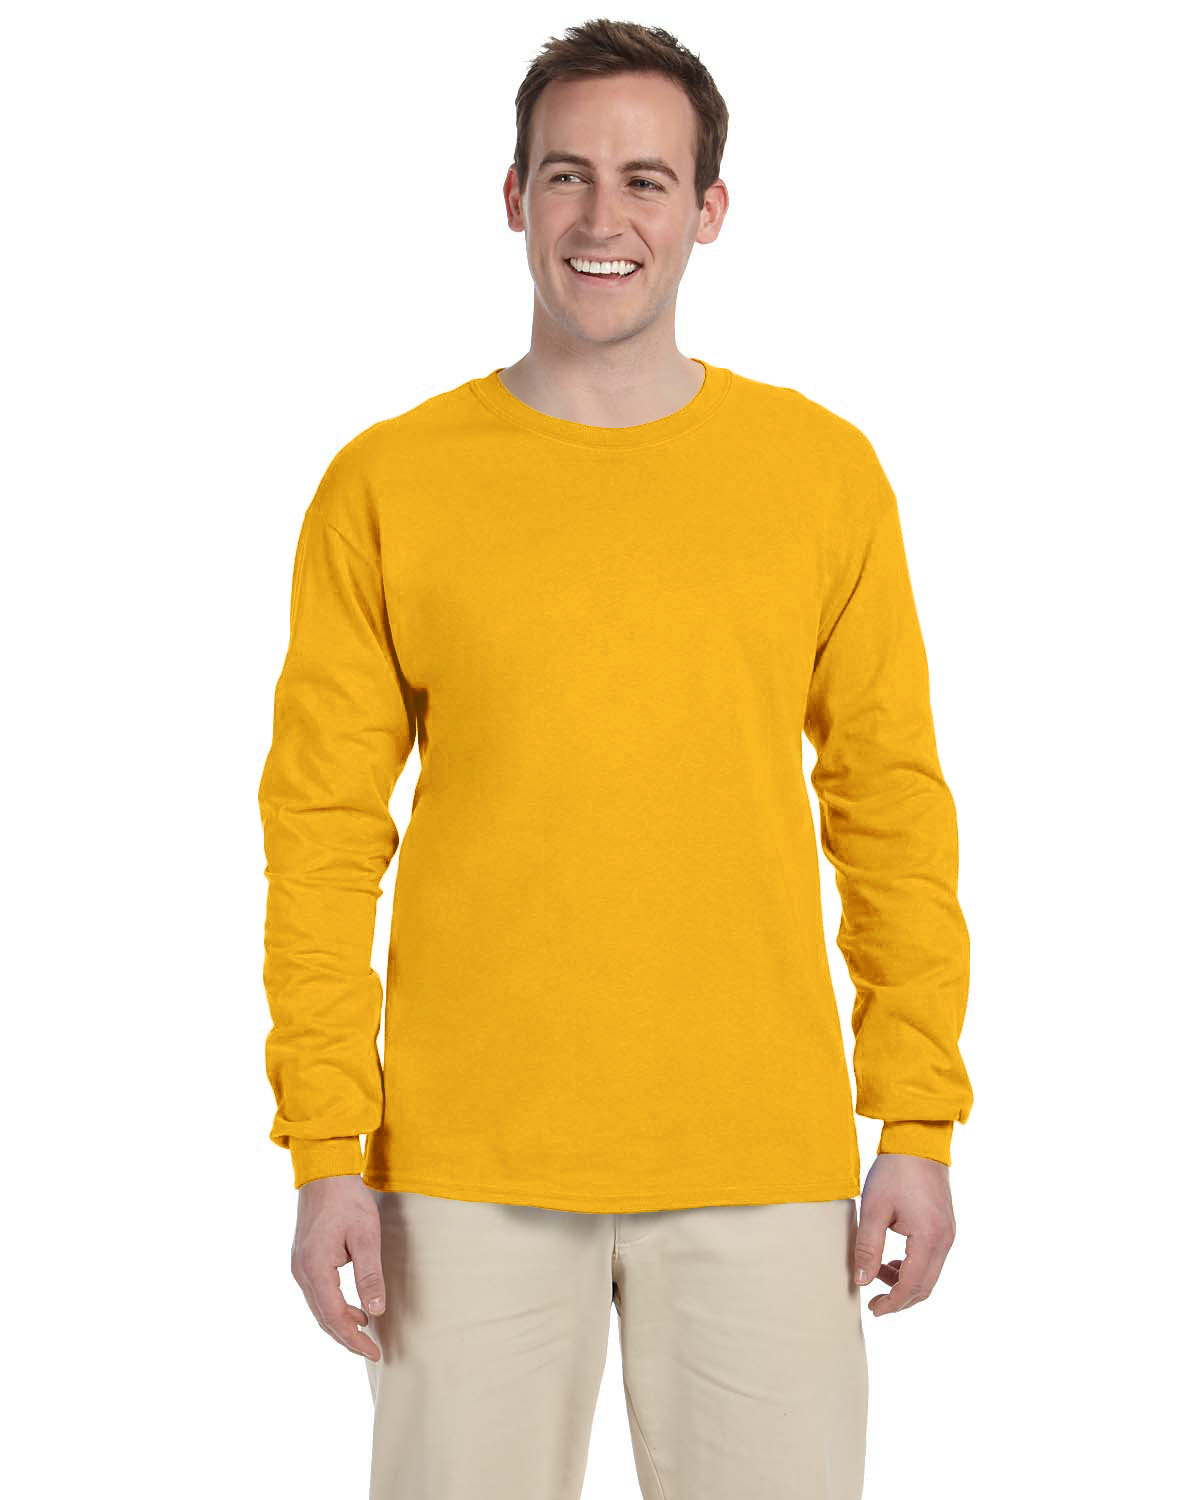 JDEFEG Mens Shirts Men's Tall Shirts Lapel Shirt Printed Fashion Button  Men's Casual Long-Sleeved Men Shirts Memory Foam Shirts for Men